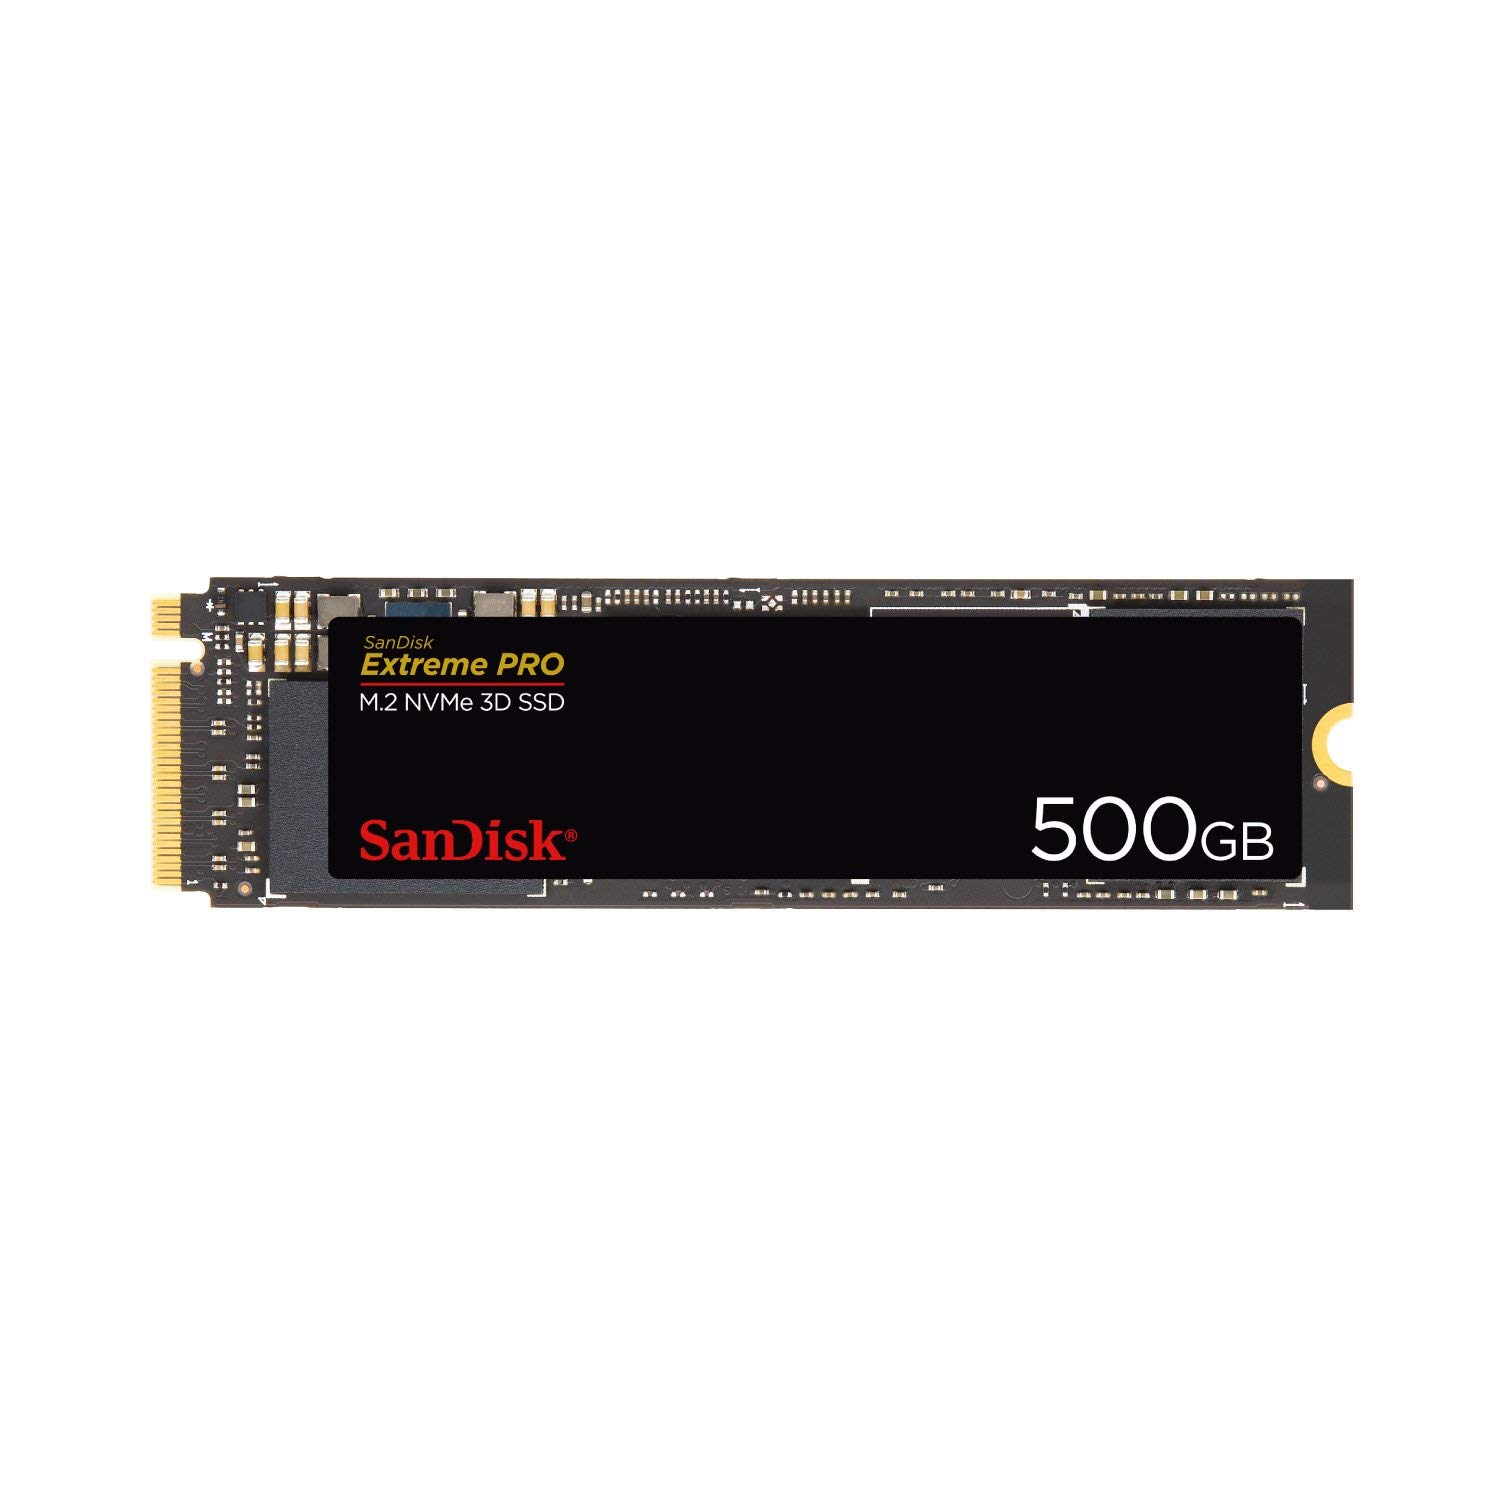 500 GB SanDisk Extreme Pro M.2 NVMe 3D SSD, M.2